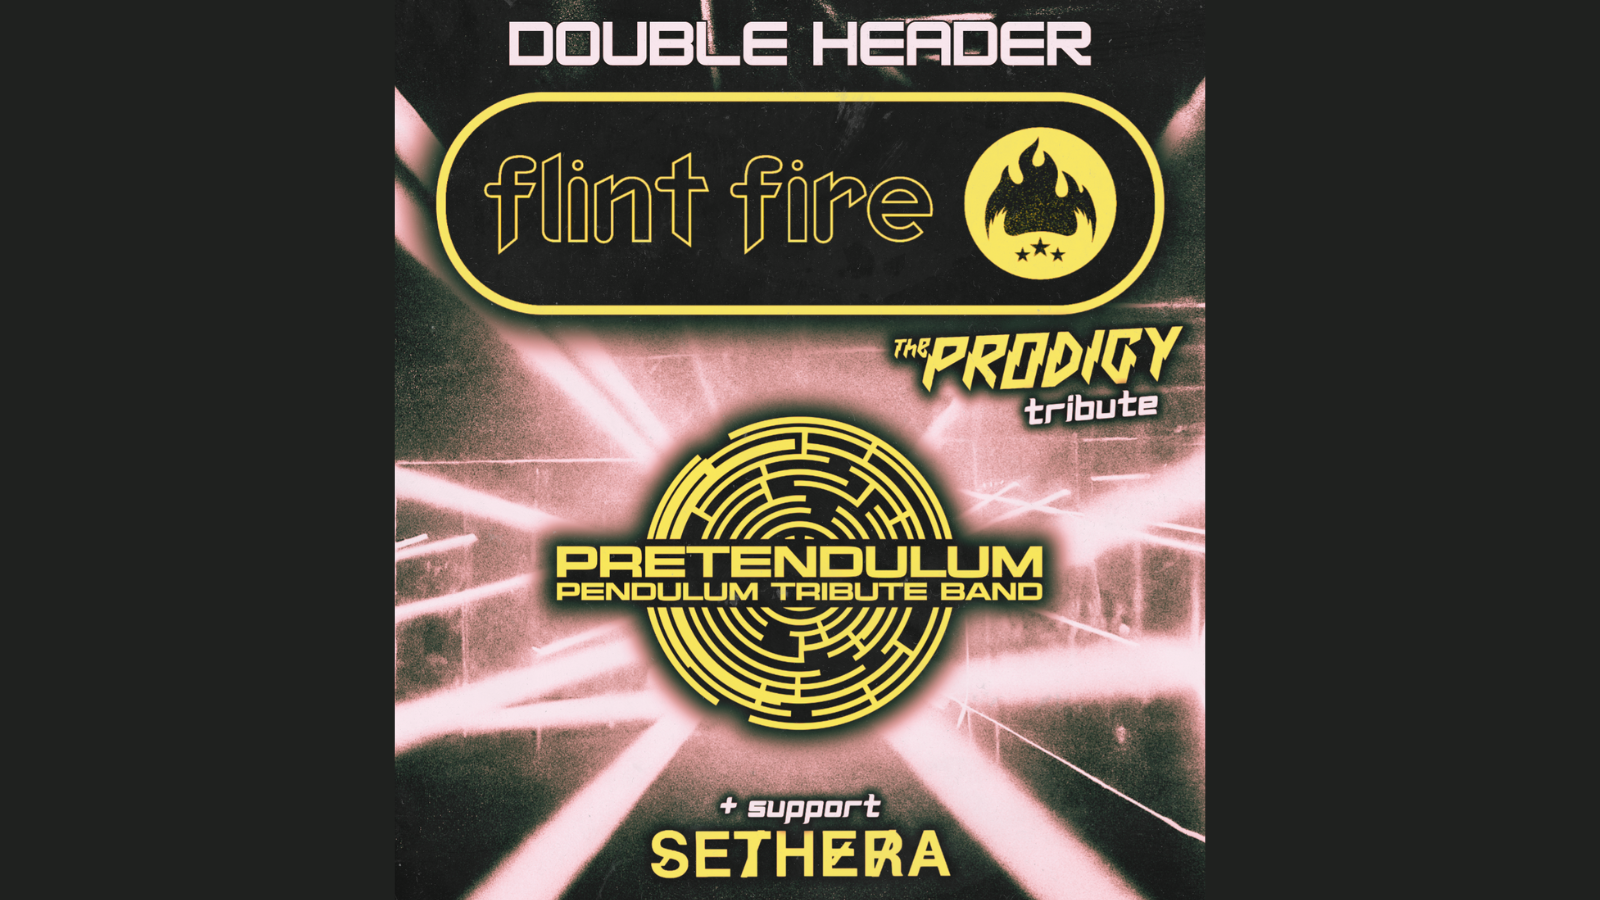 Flint Fire (Prodigy Tribute) & Pretendulum (Pendulum Tribute)